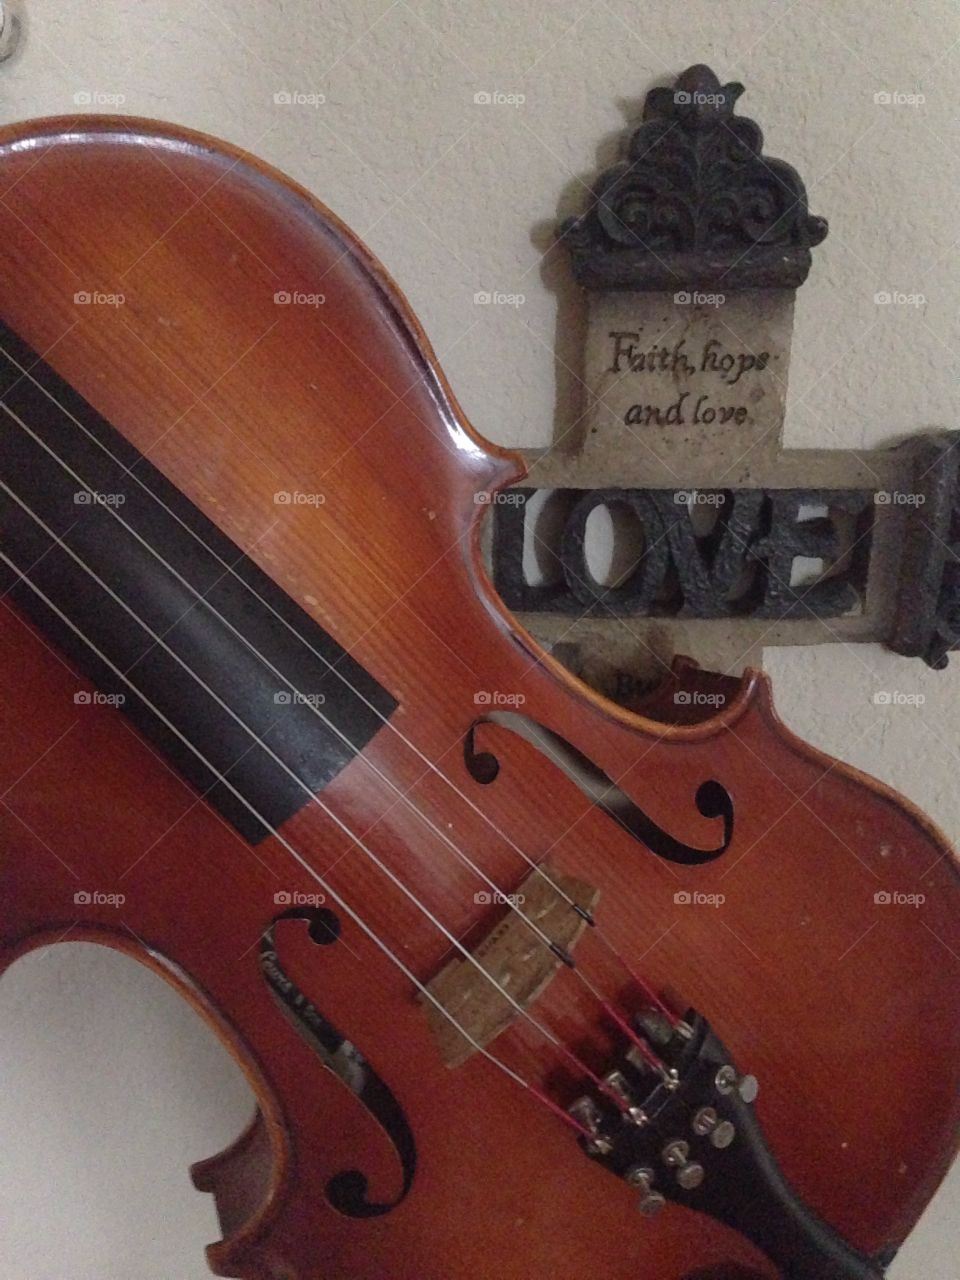 Love of a violin. Violin and love cross